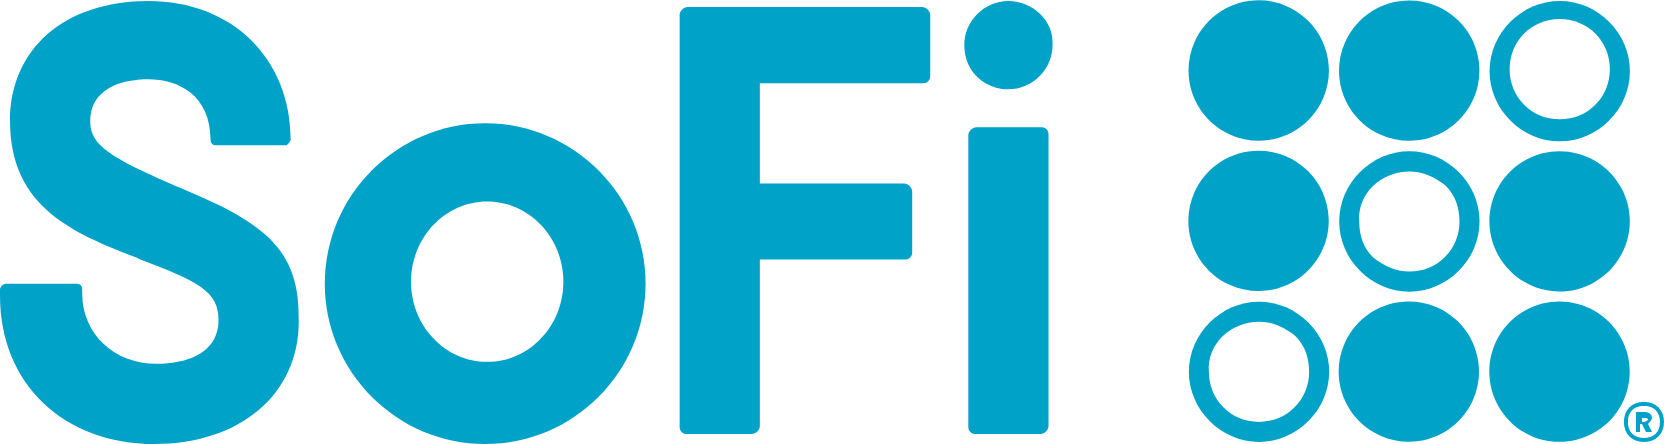 SoFi logo large (transparent PNG)